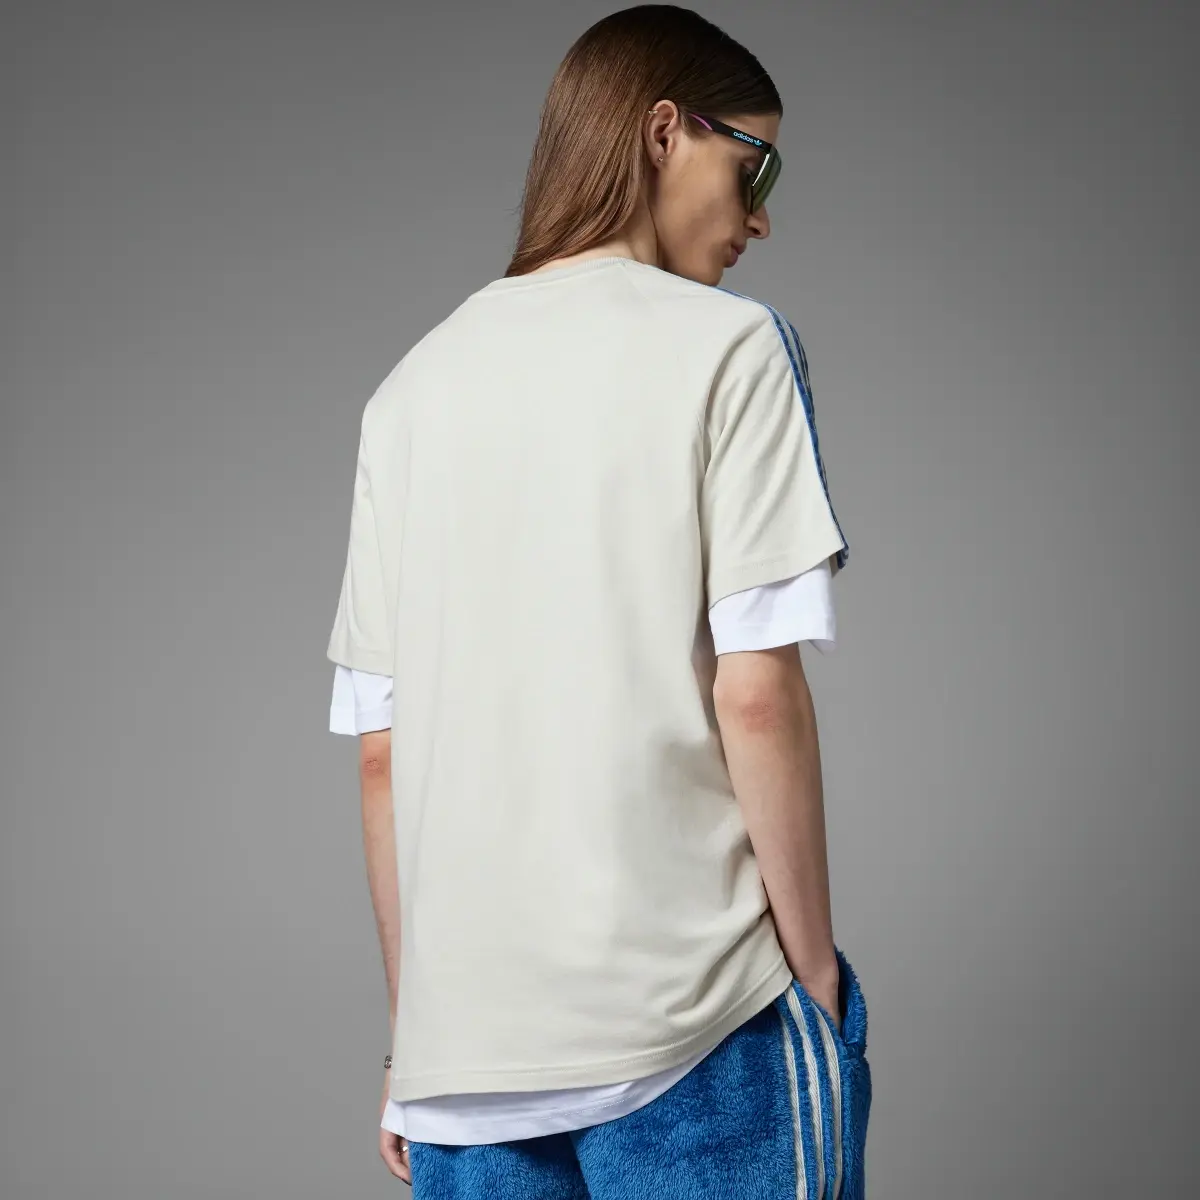 Adidas Indigo Herz Fur T-Shirt. 2